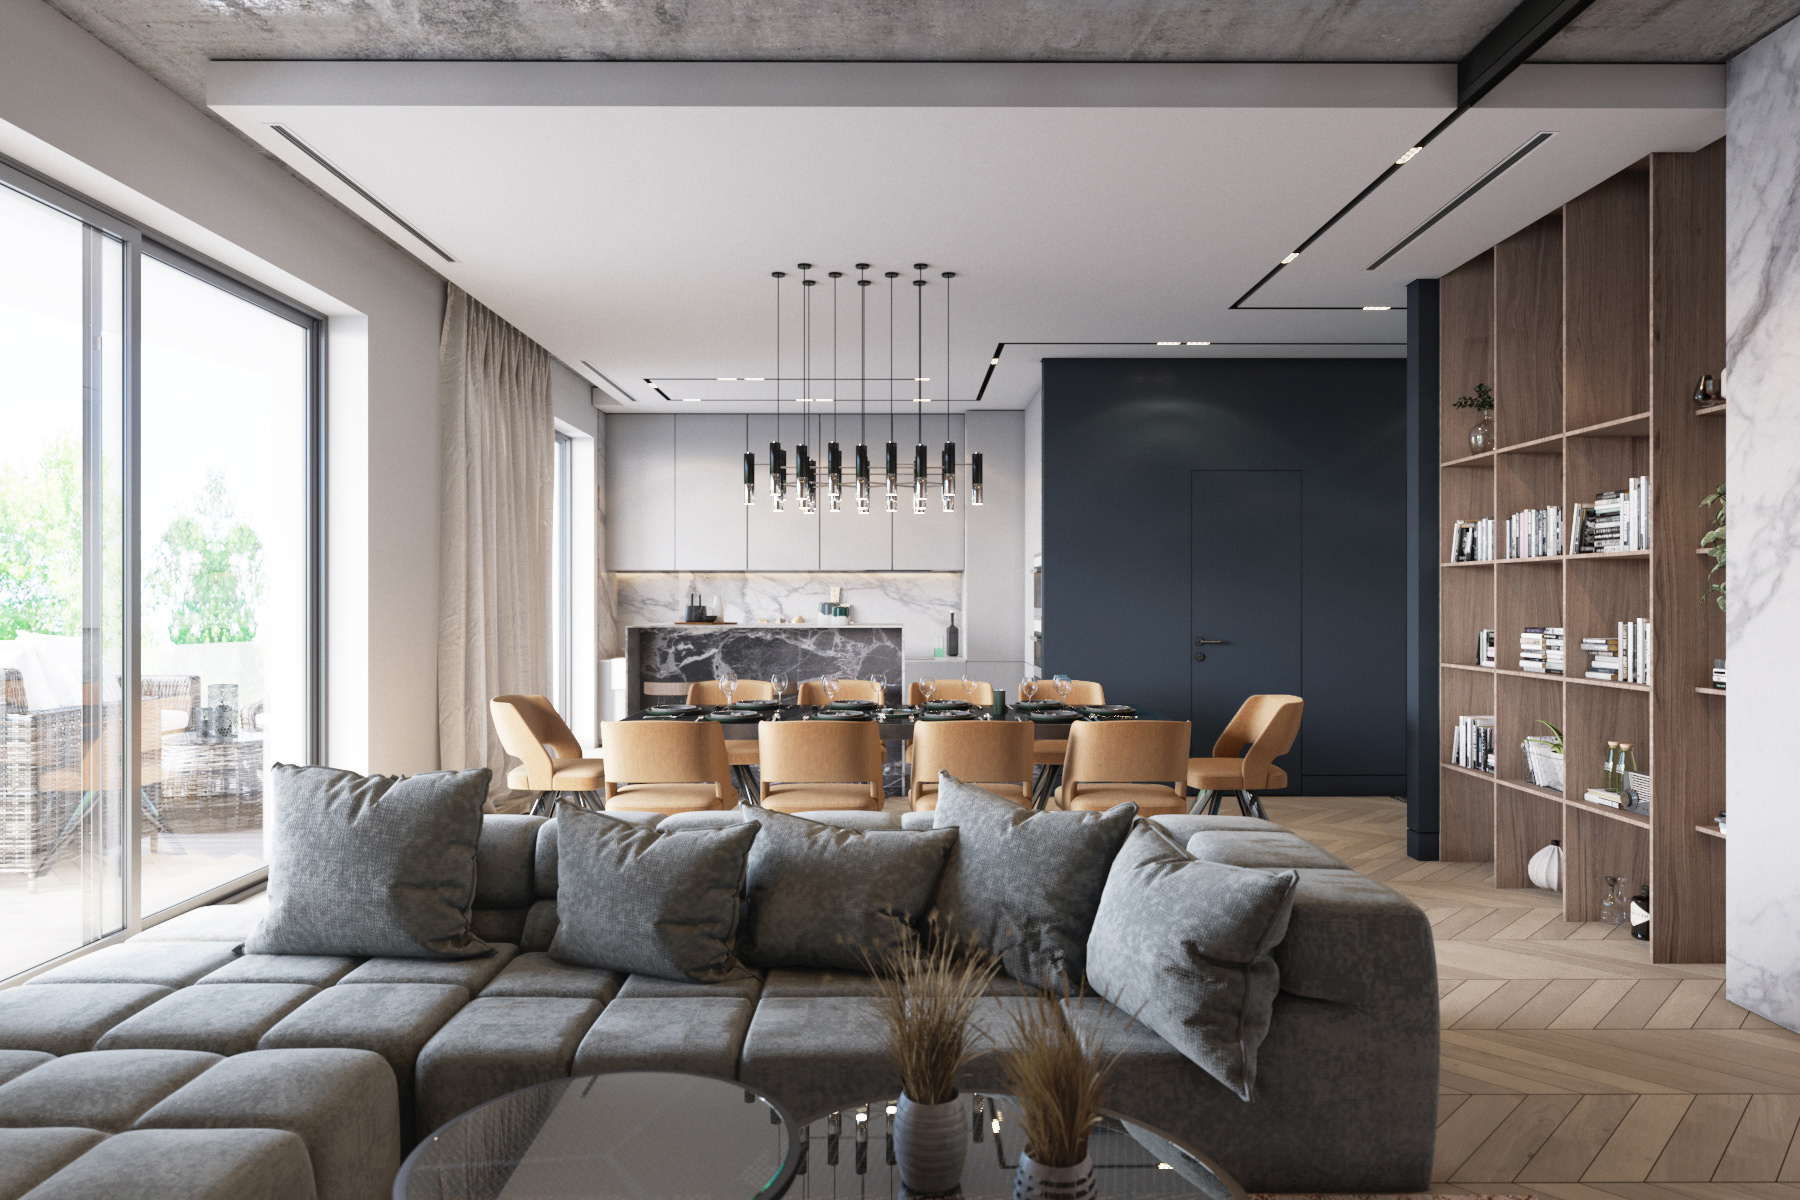 Kitchen-living room on Behance